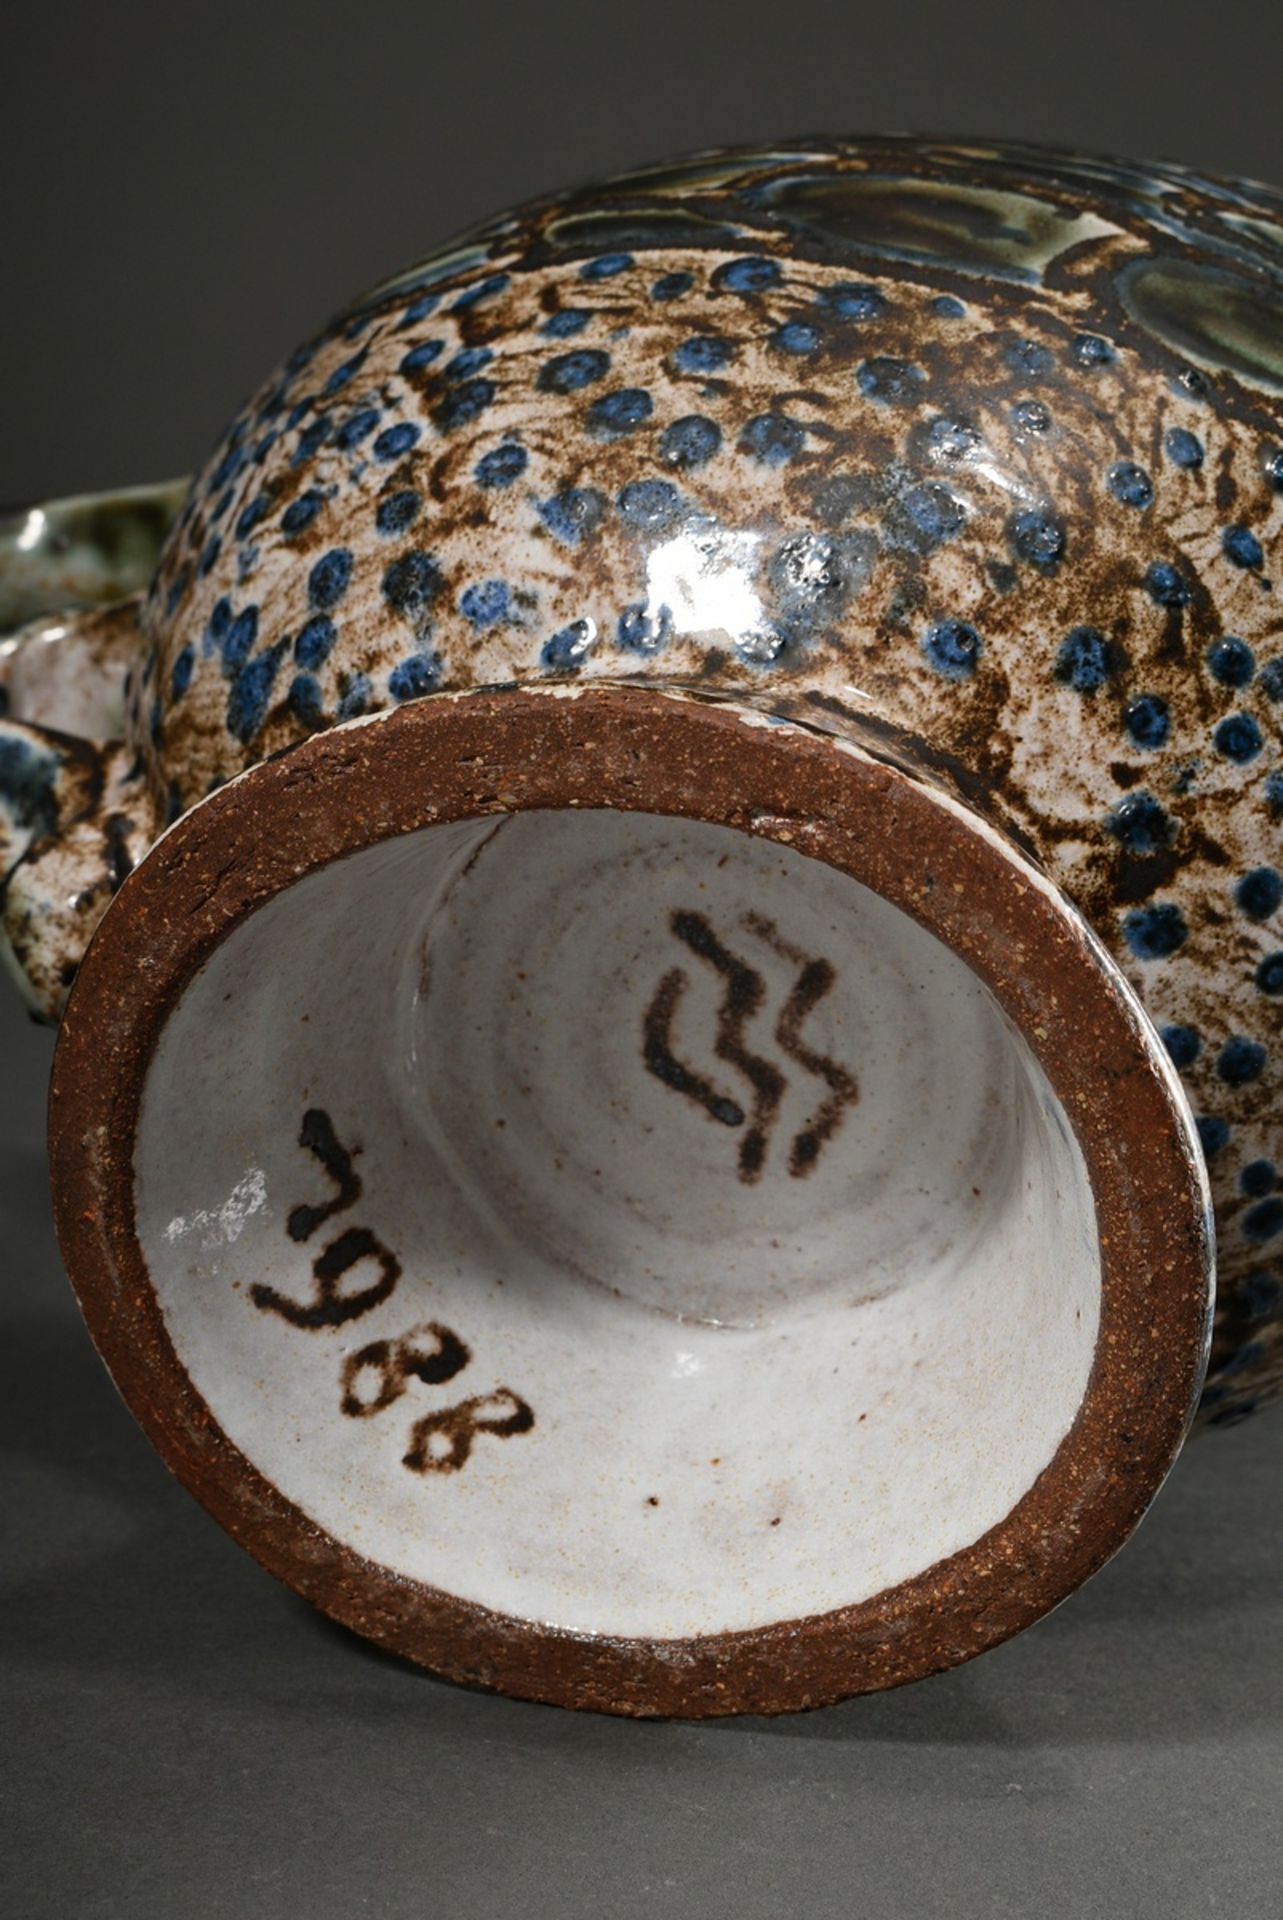 Maetzel, Monika (1917-2010) studio ceramic vessel in animal form "Chicken", ceramic white/green/blu - Image 6 of 6